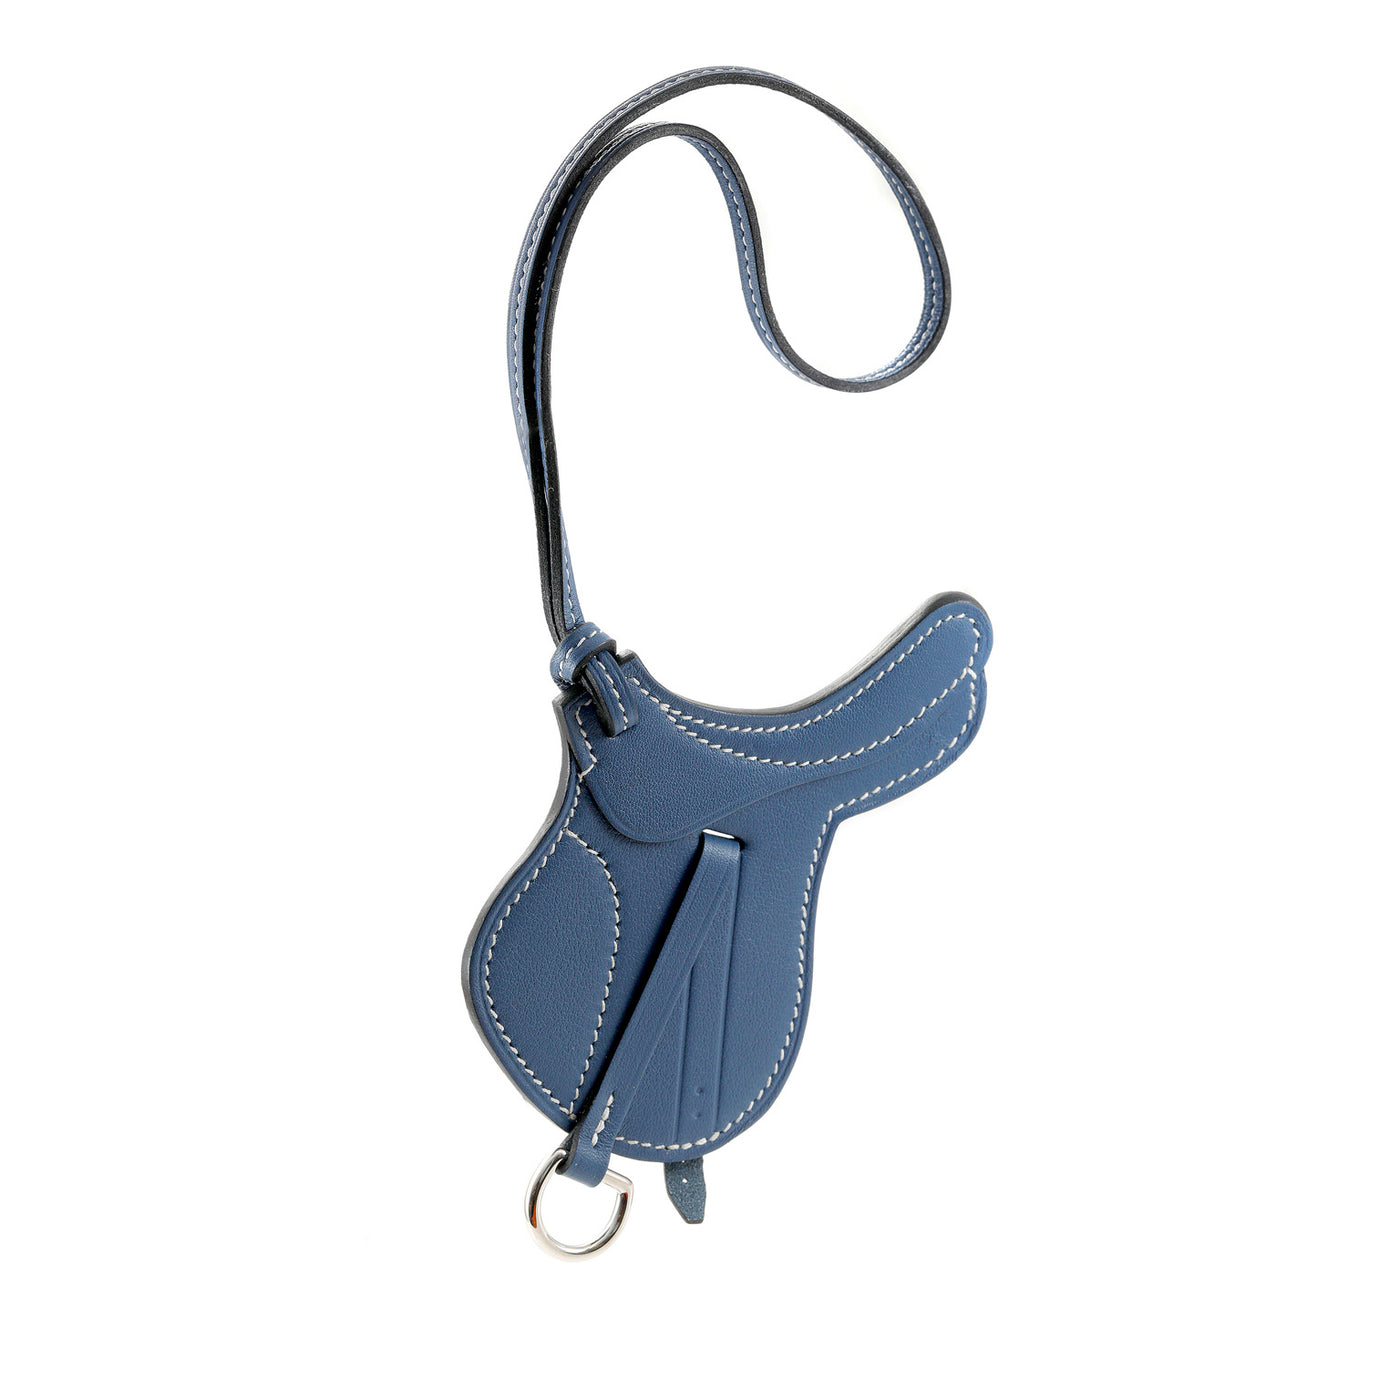 Hermès Navy Blue Saddle Bag Charm